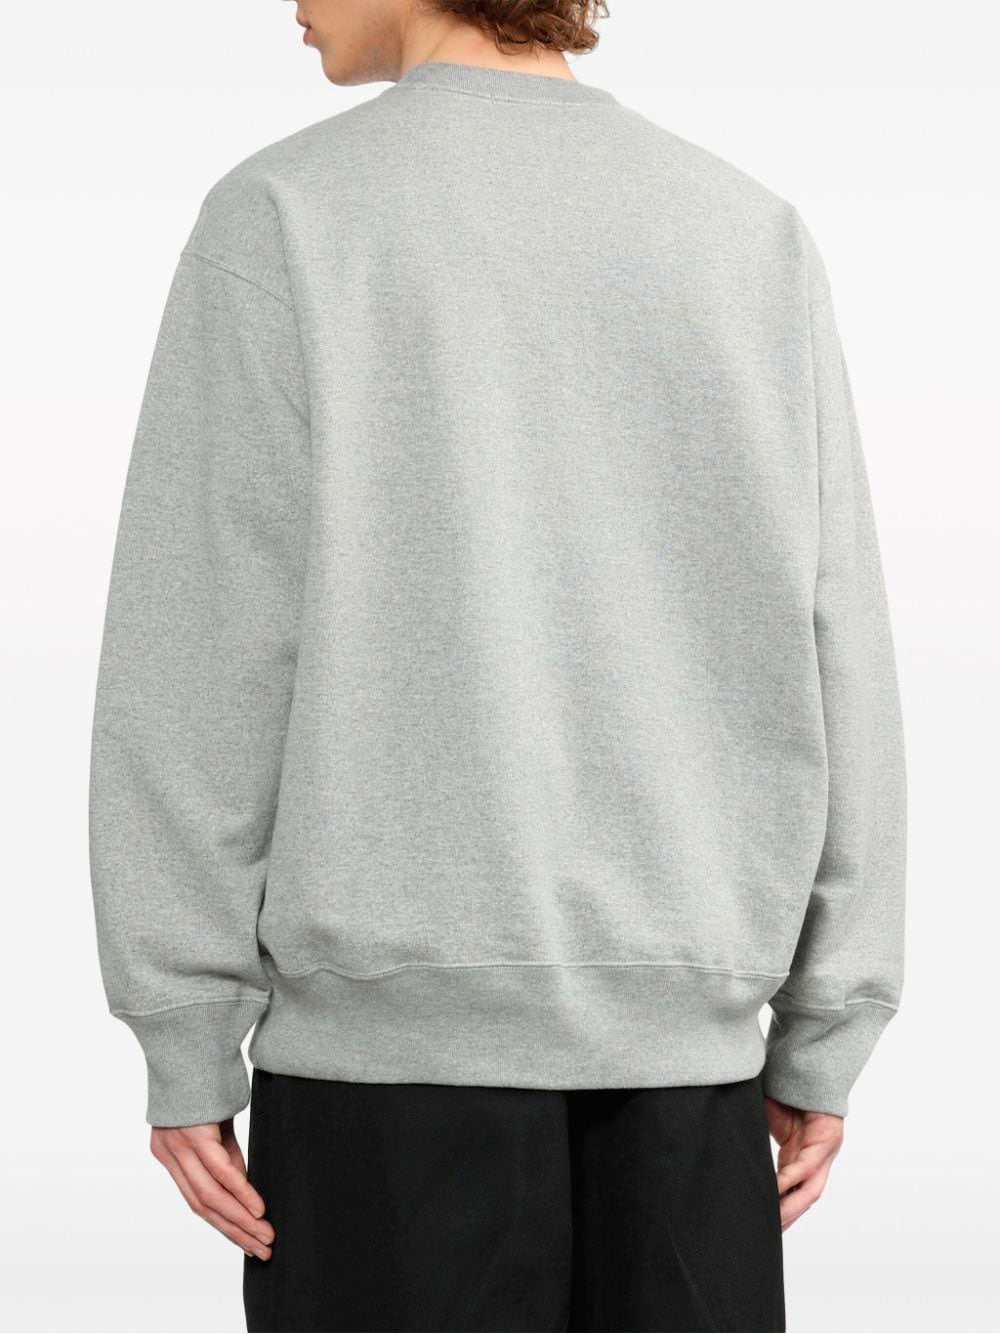 Homme print cotton sweatshirt